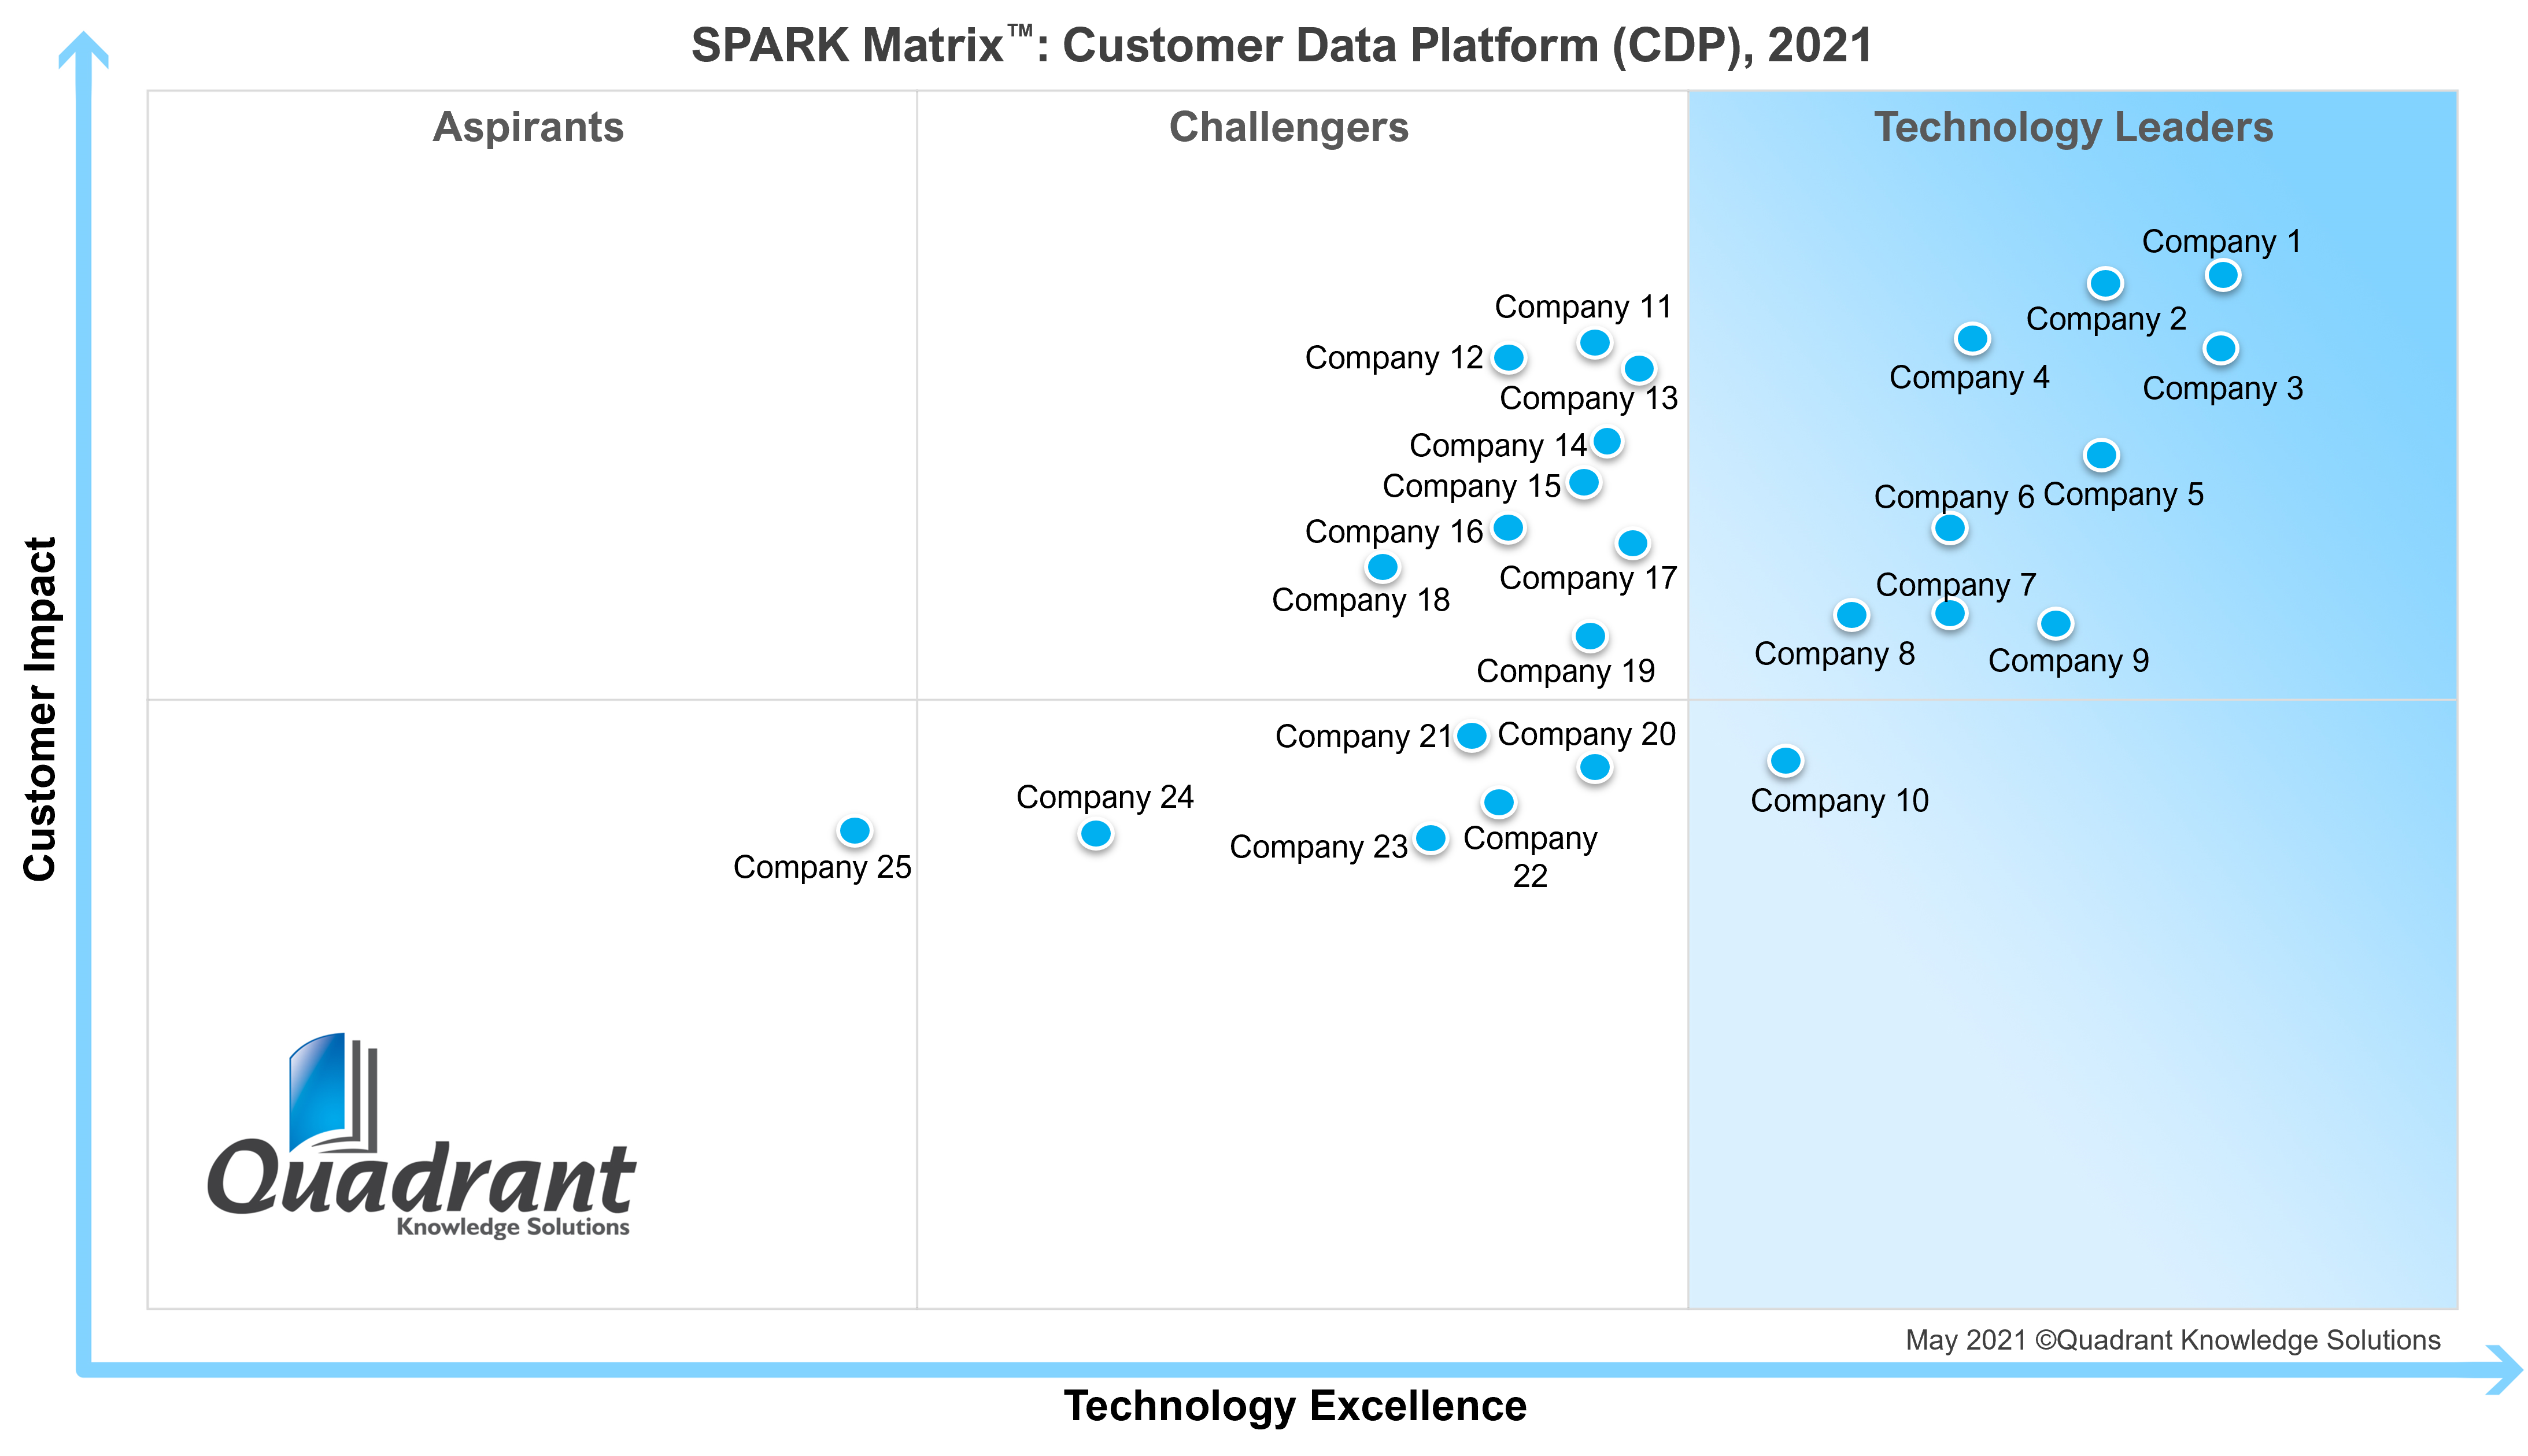 CDP_SPARK Matrix_2021